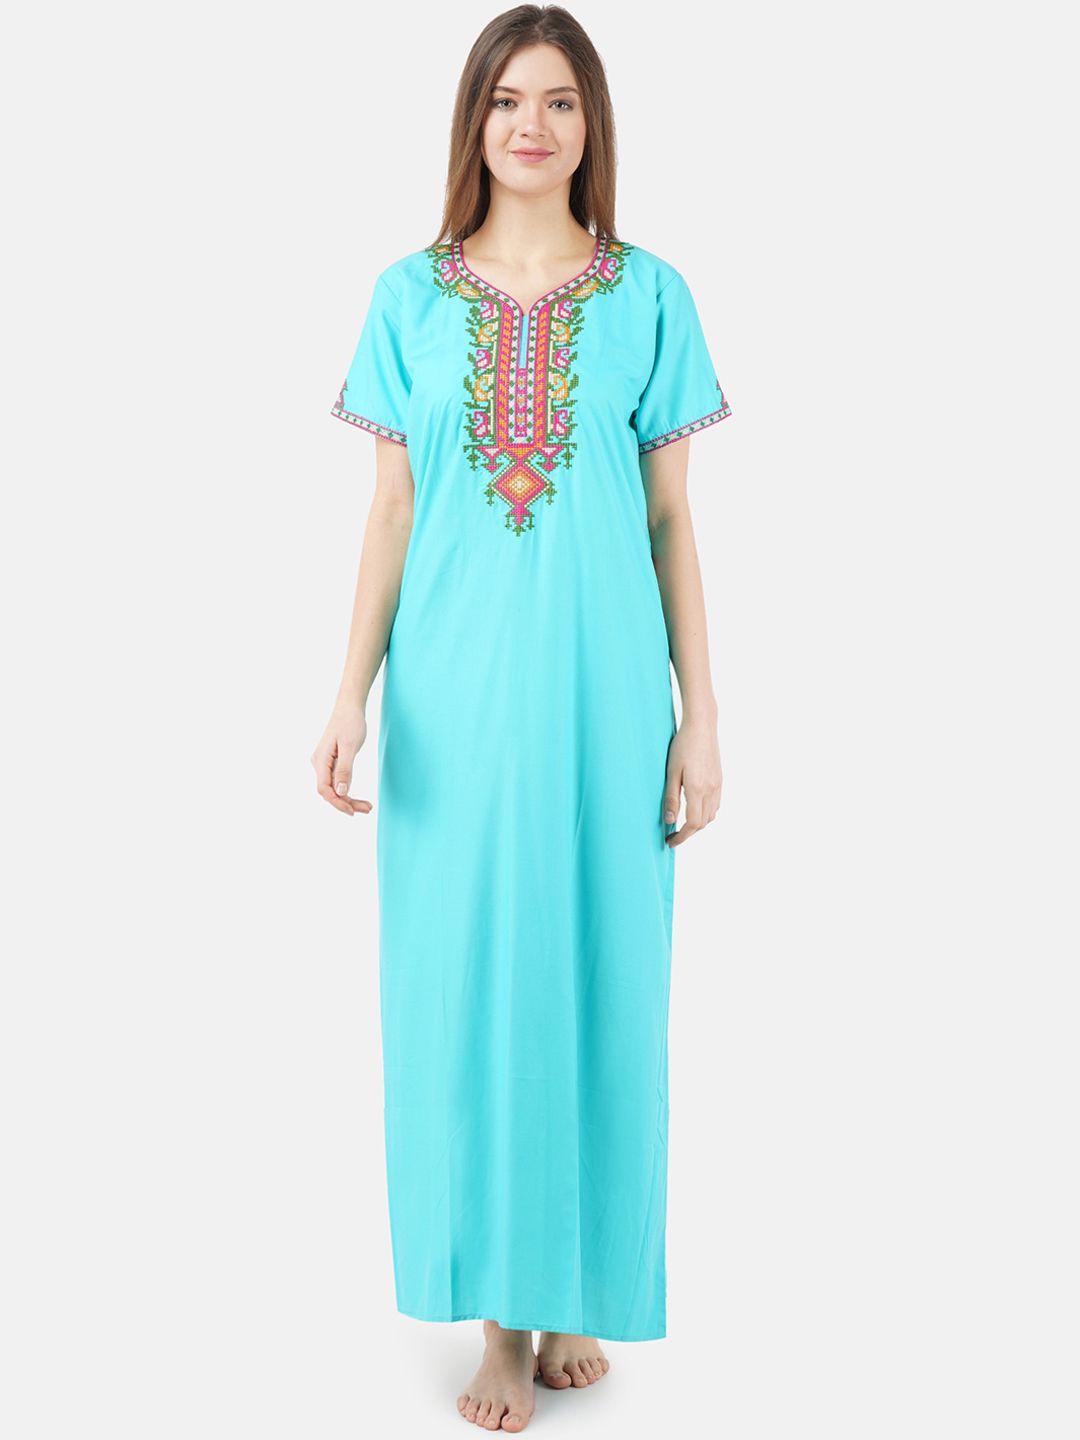 koi sleepwear woman turquoise blue embroidered cotton maxi nightdress